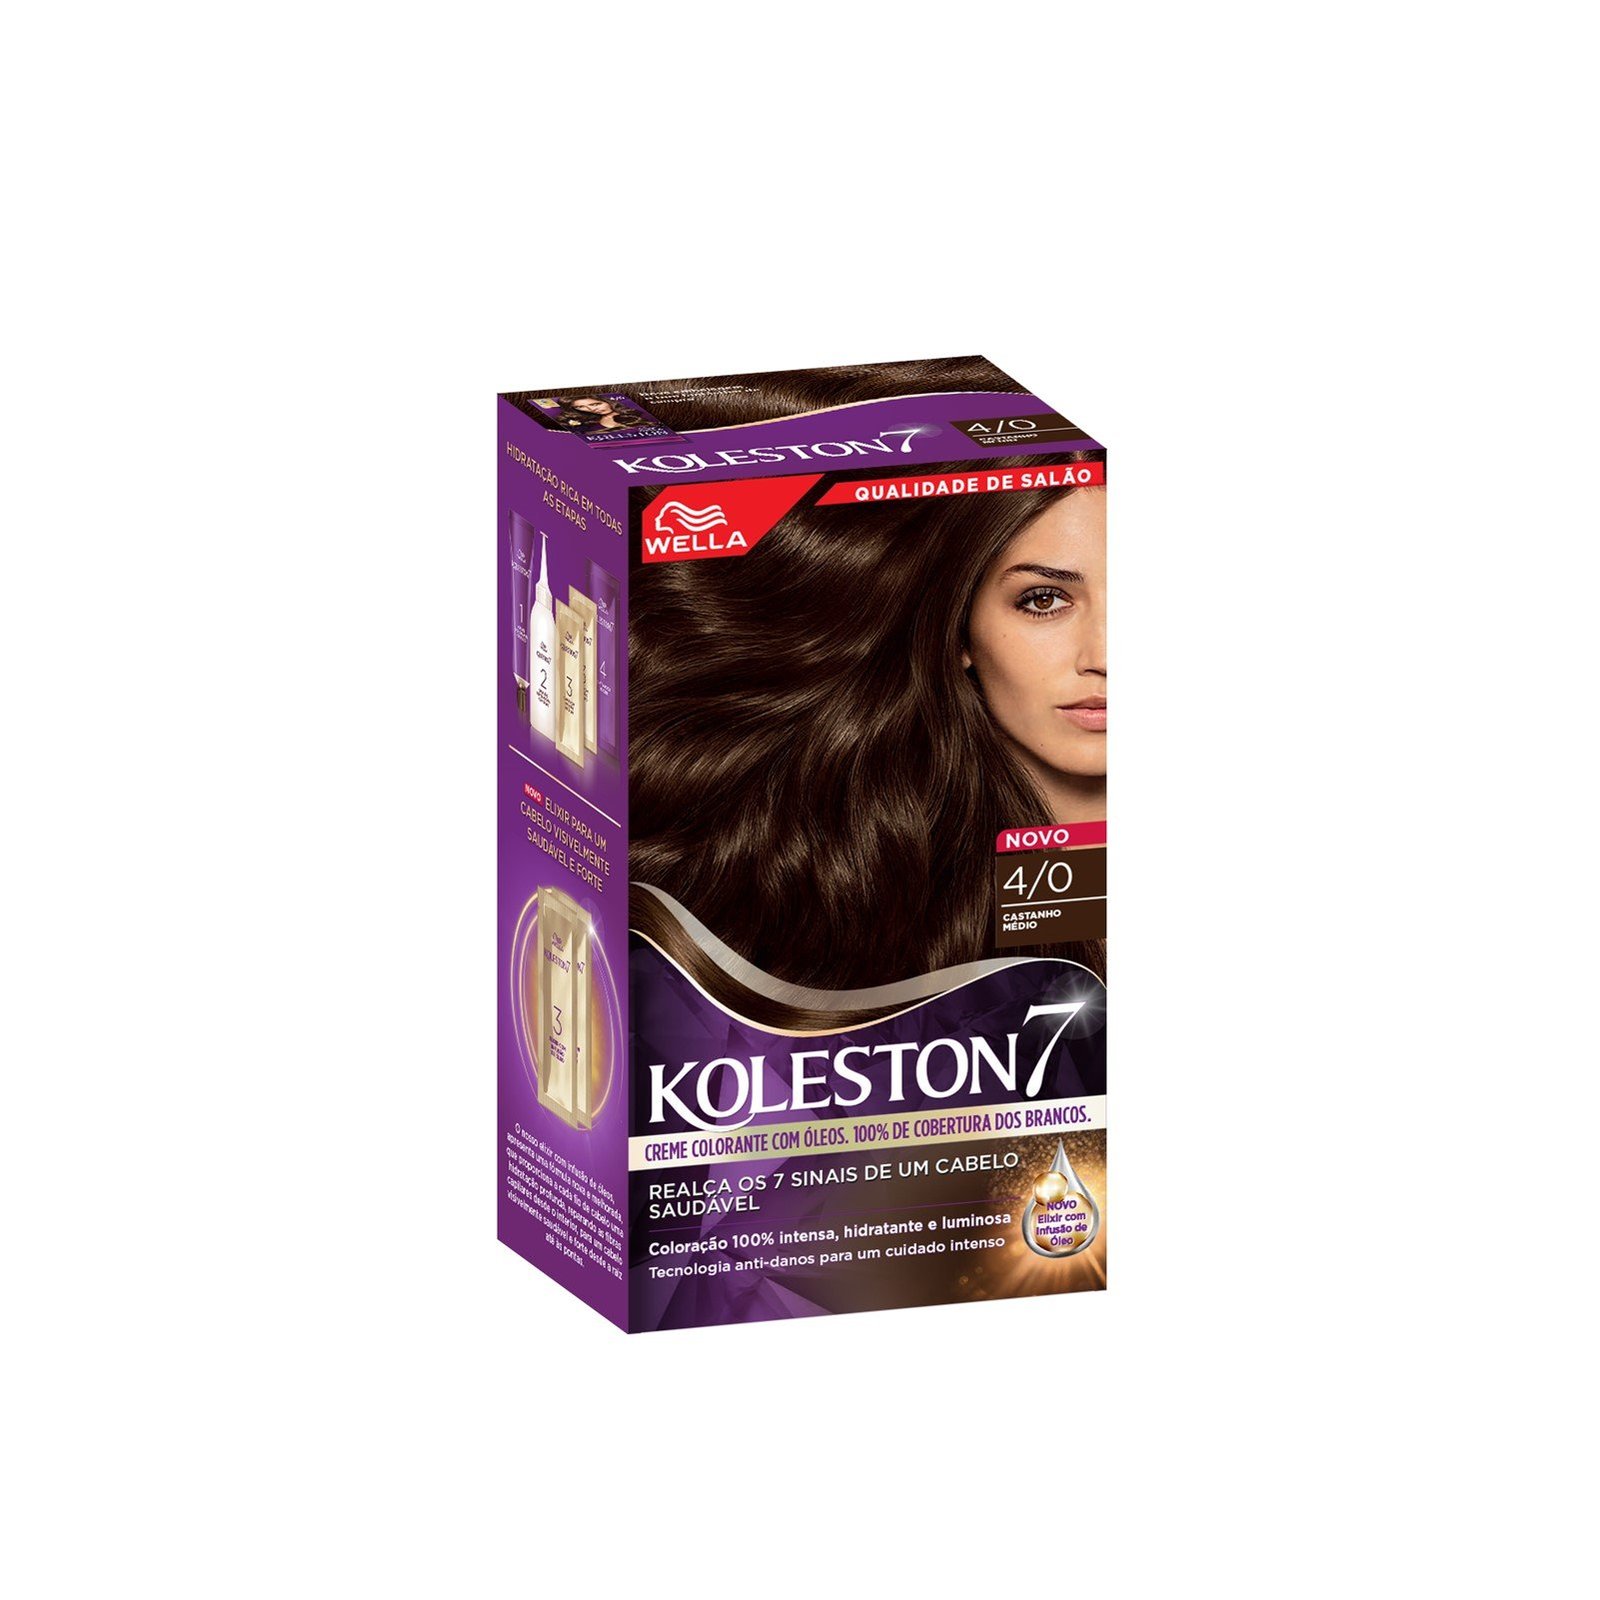 koleston hair dye instructions